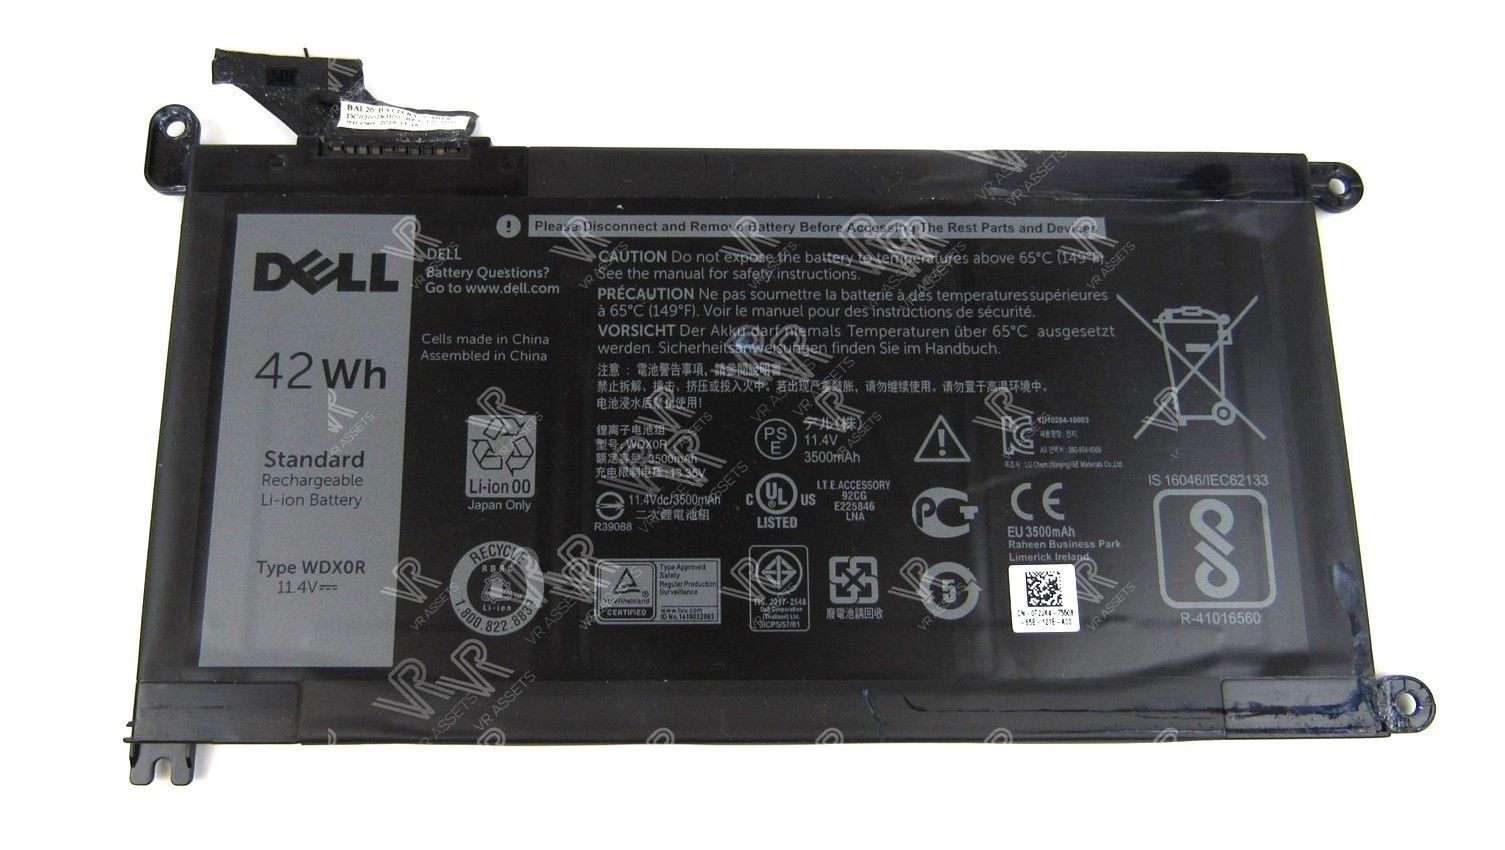 Dell Inspiron 11 3189 Genuine Laptop Battery 42Wh 11.4V 3500mAh WDX0R 0CYMGM